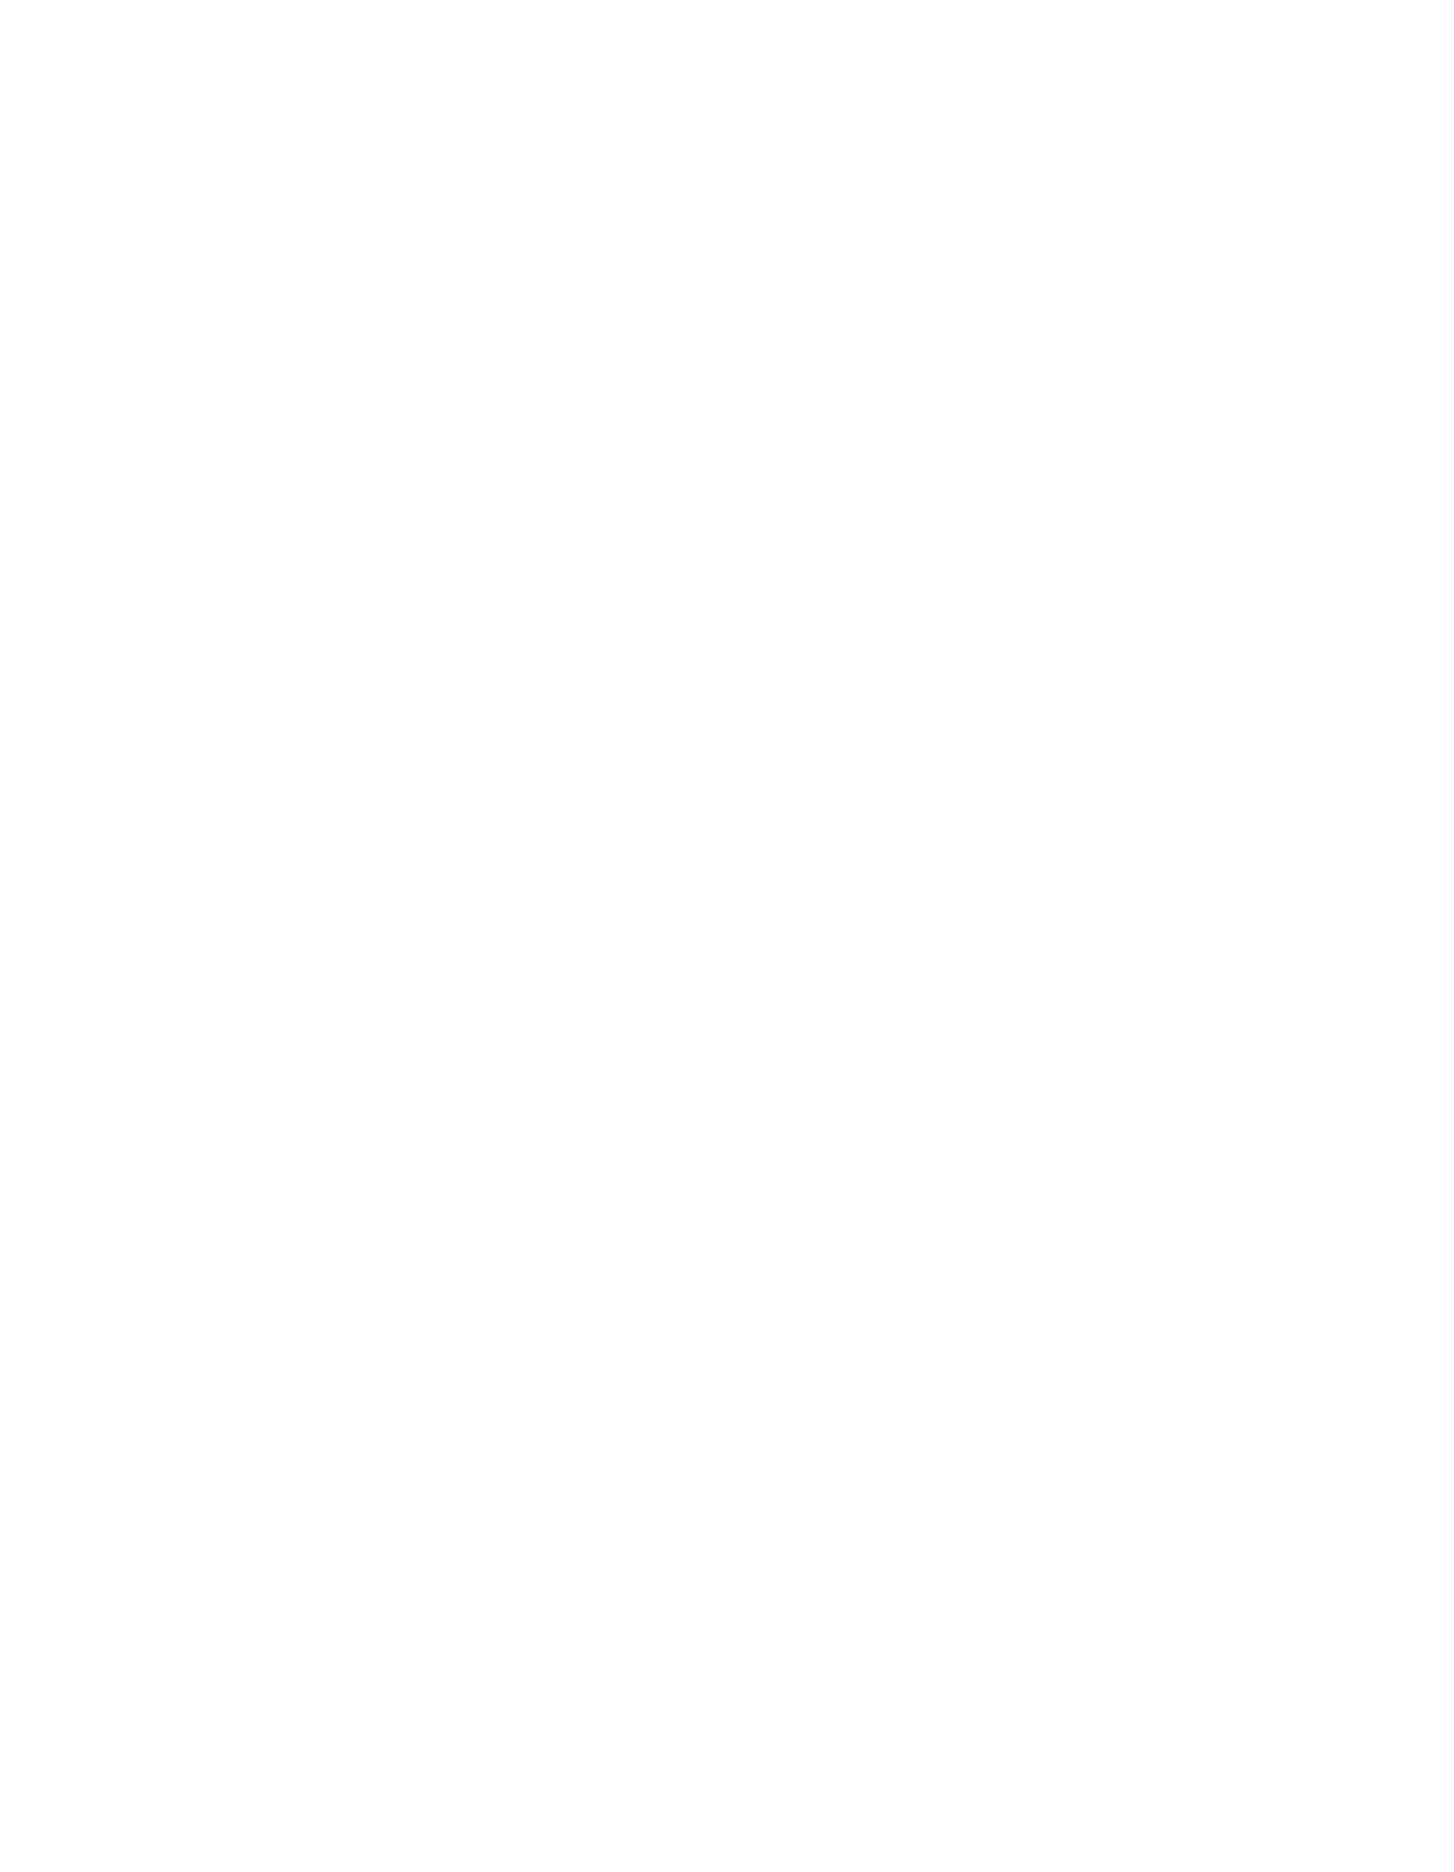 Baku Contemporary Music Days